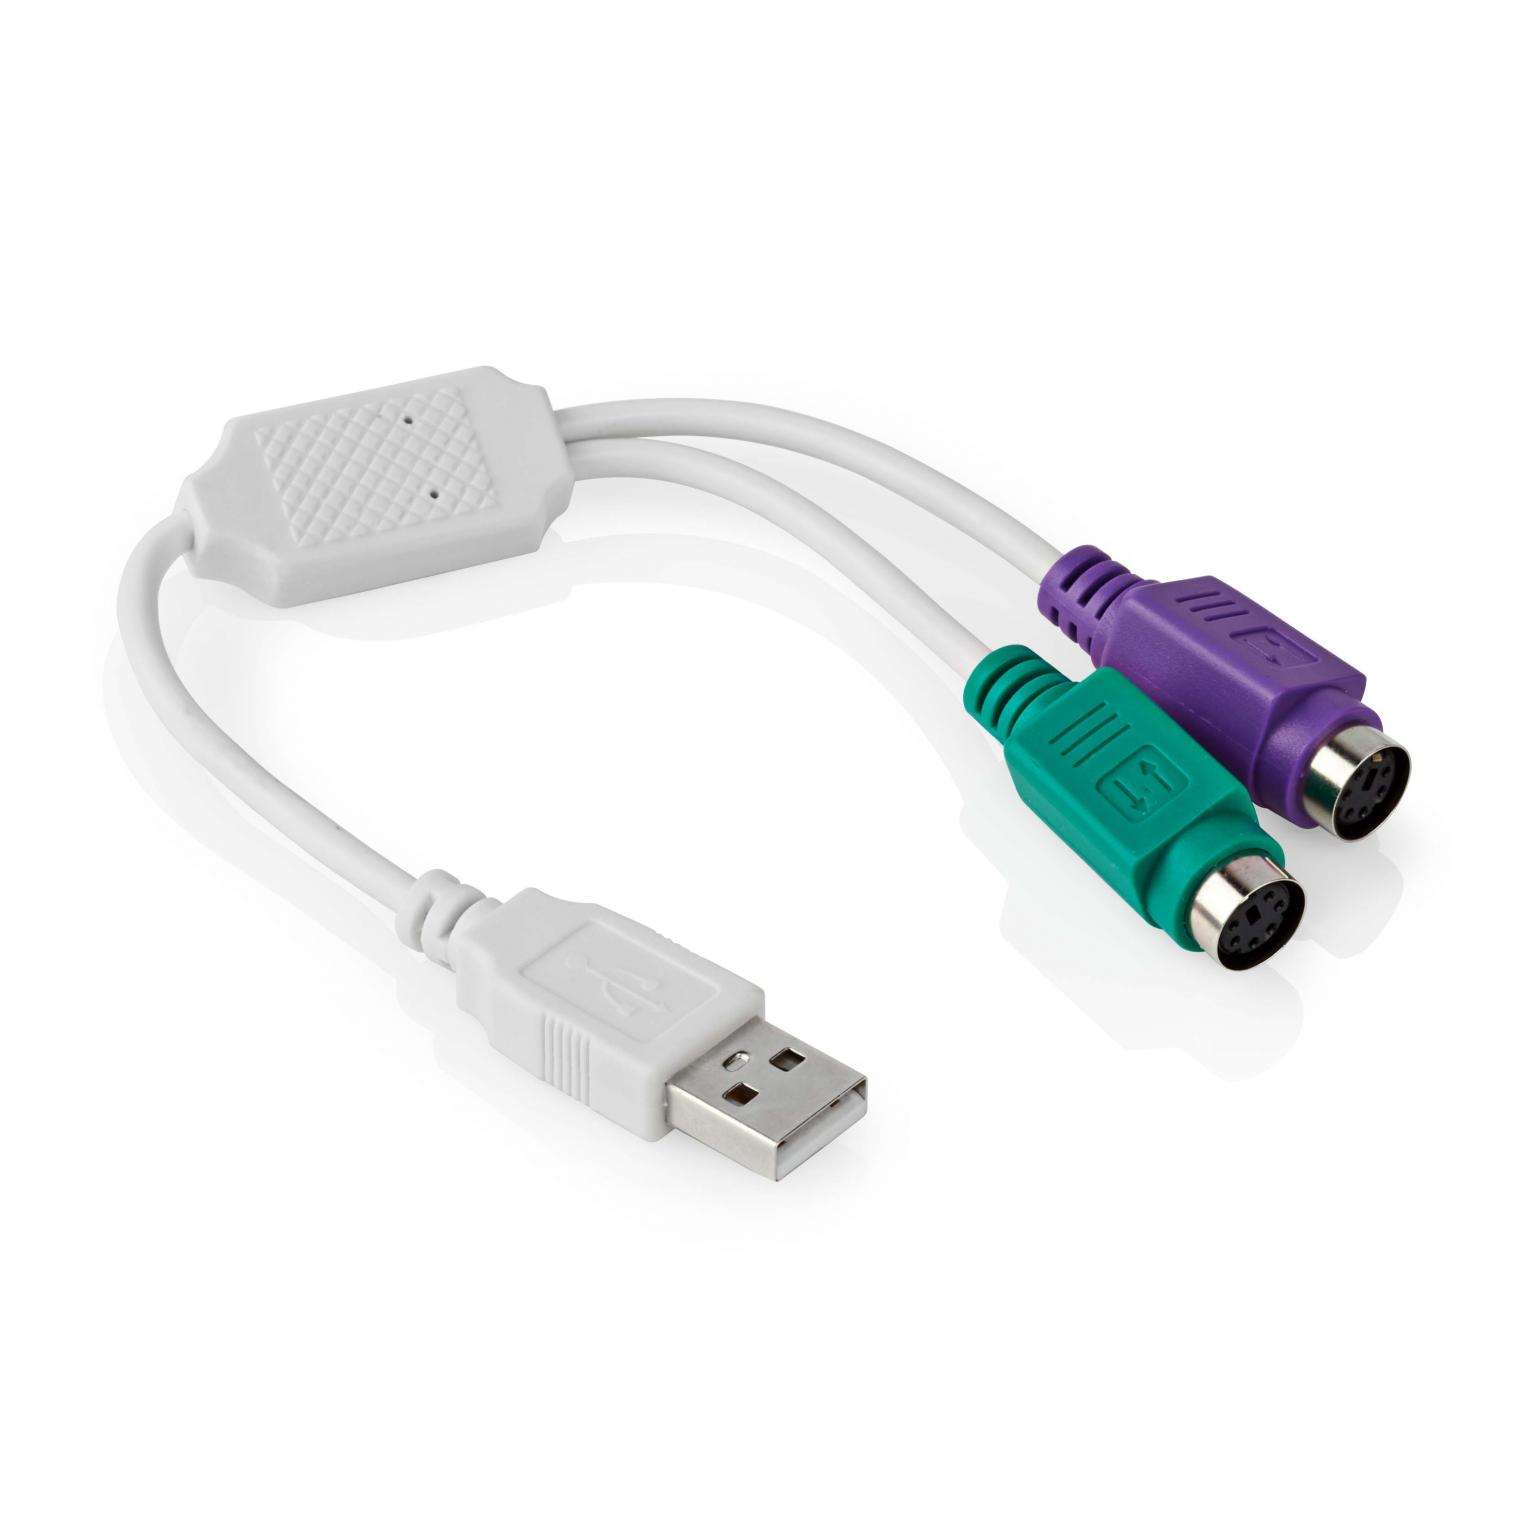 USB 2.0 auf PS/2 Adapter - Allteq